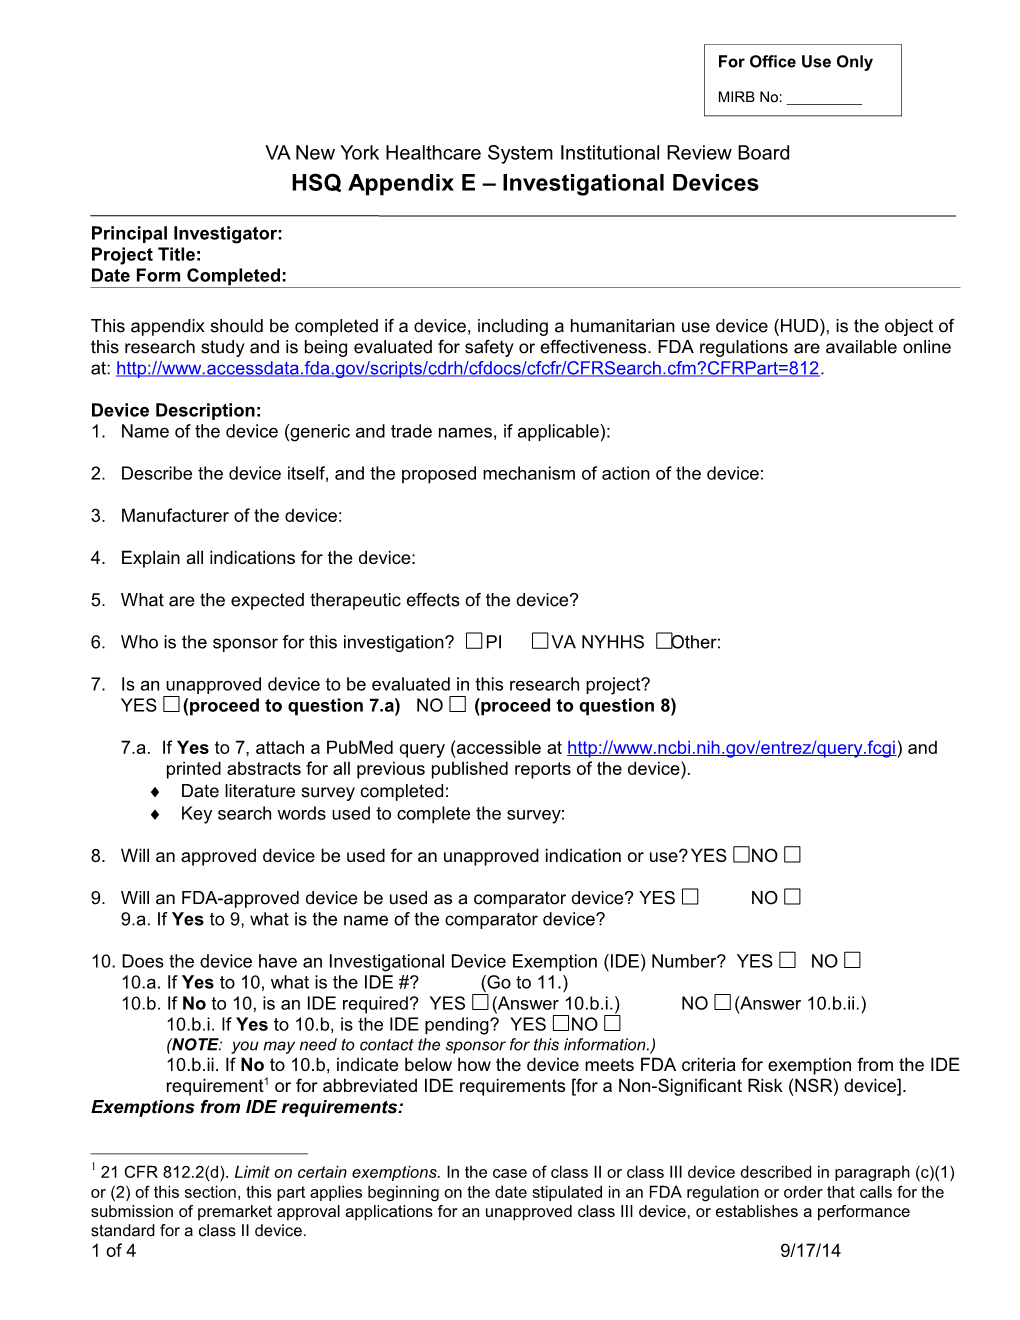 HSQ Appendix E - Investigational Devices